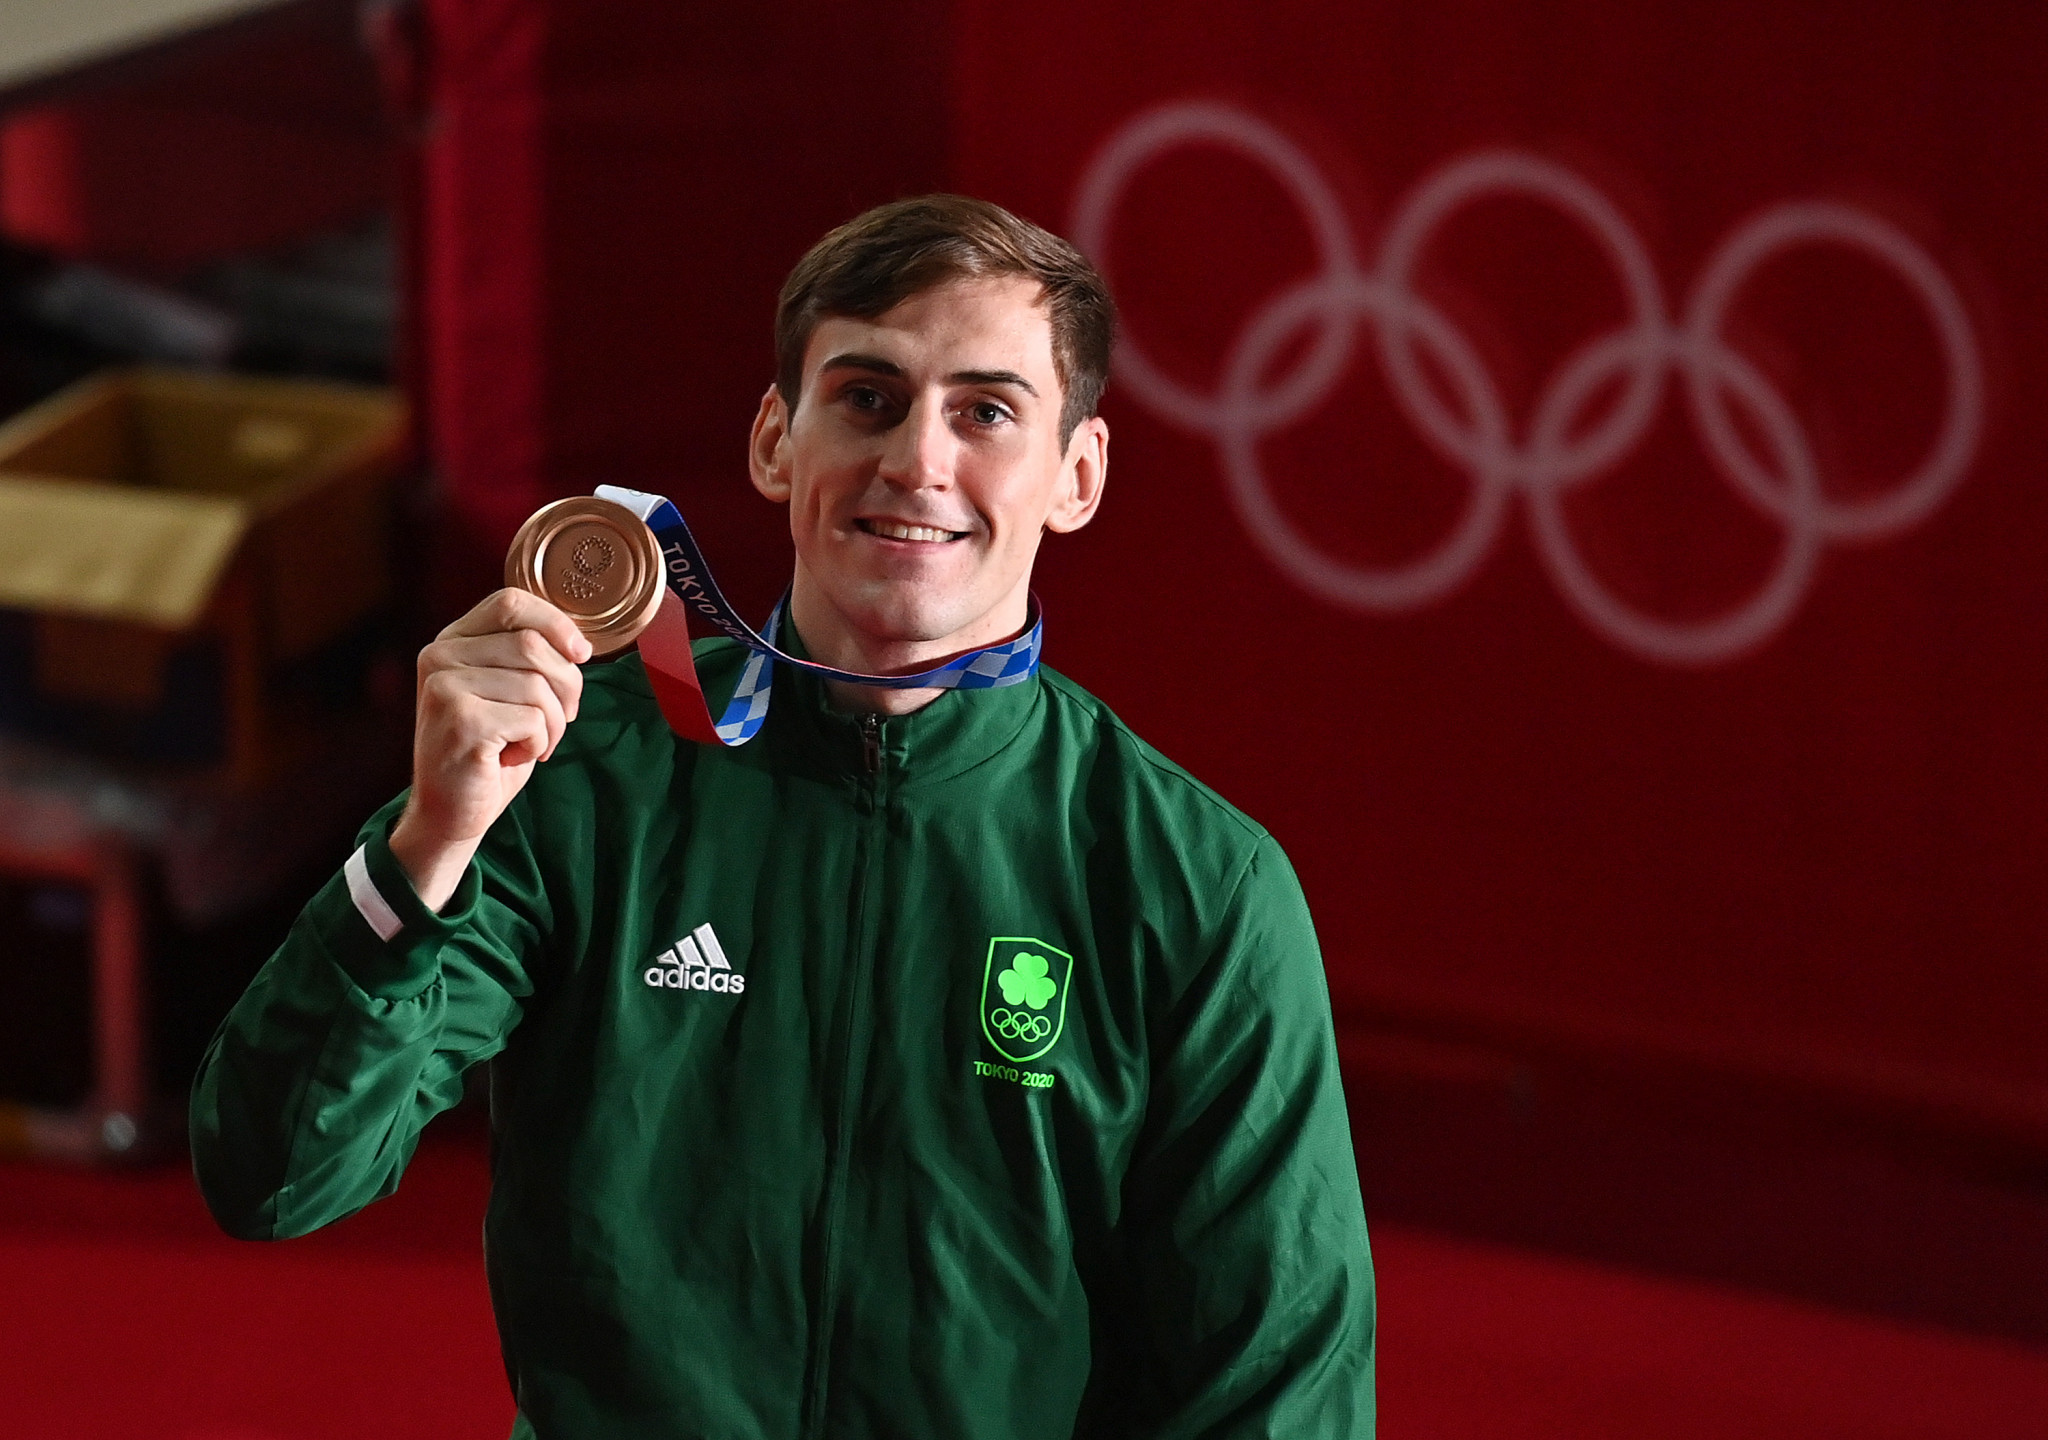 Olympic bronze medallist Aidan Walsh headlines Northern Ireland's boxing team ©Getty Images